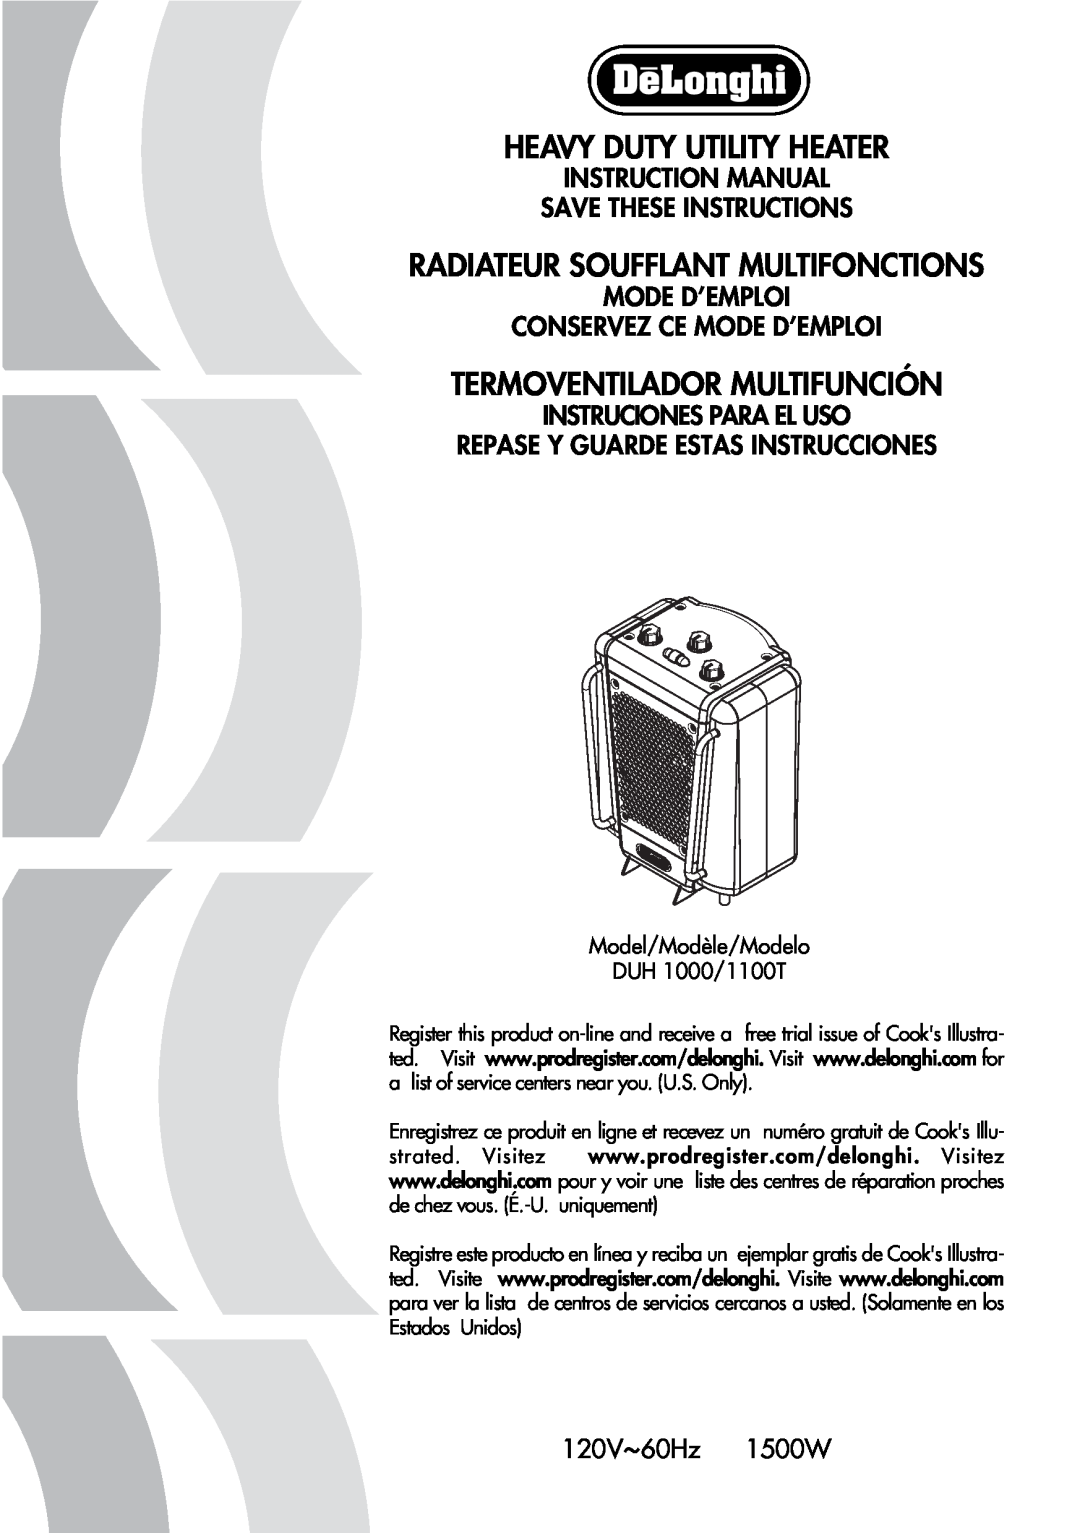 DeLonghi DUH1000 instruction manual Heavy Duty Utility Heater, Radiateur Soufflant Multifonctions, 120V~60Hz 1500W 